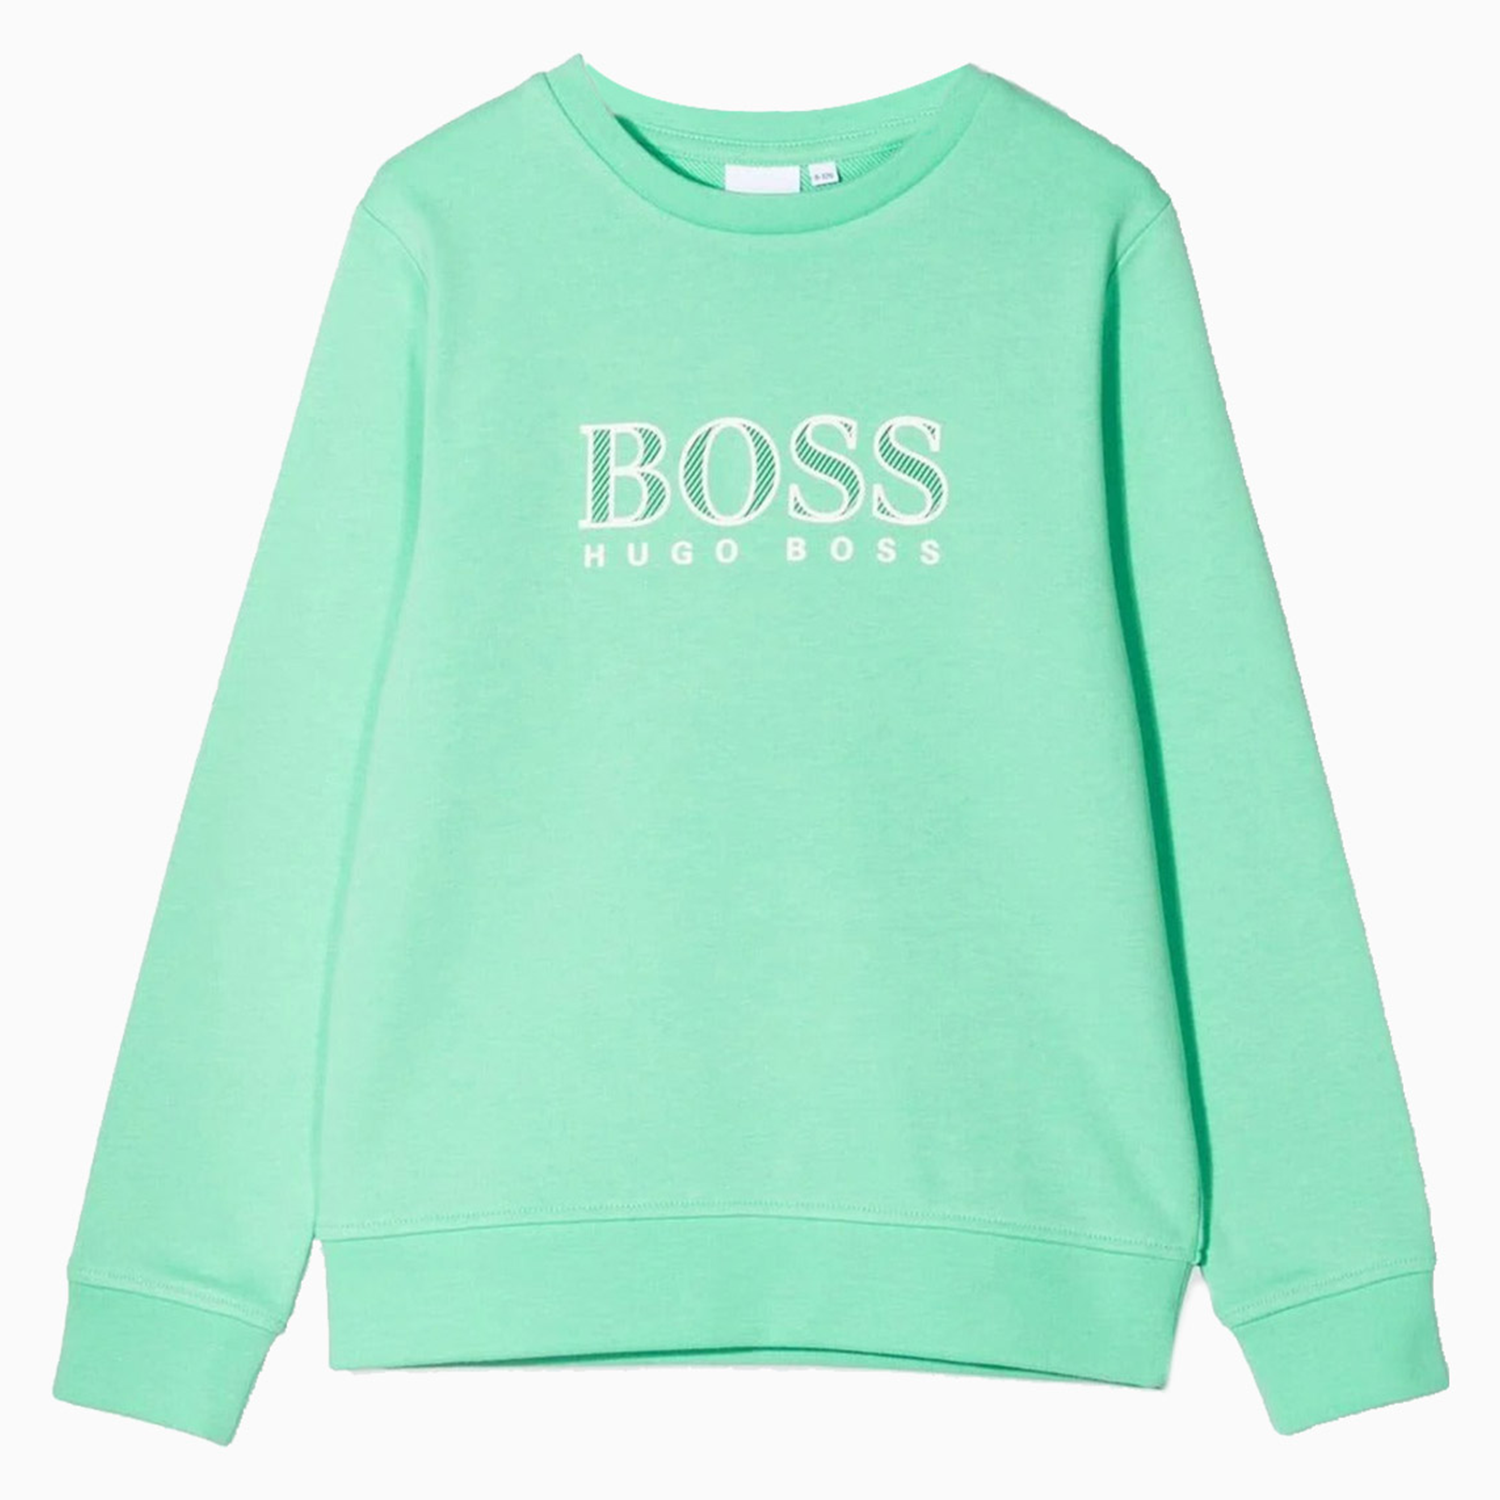 Hugo Boss Kid's French Terry Sweatshirt - Color: Green - Kids Premium Clothing -